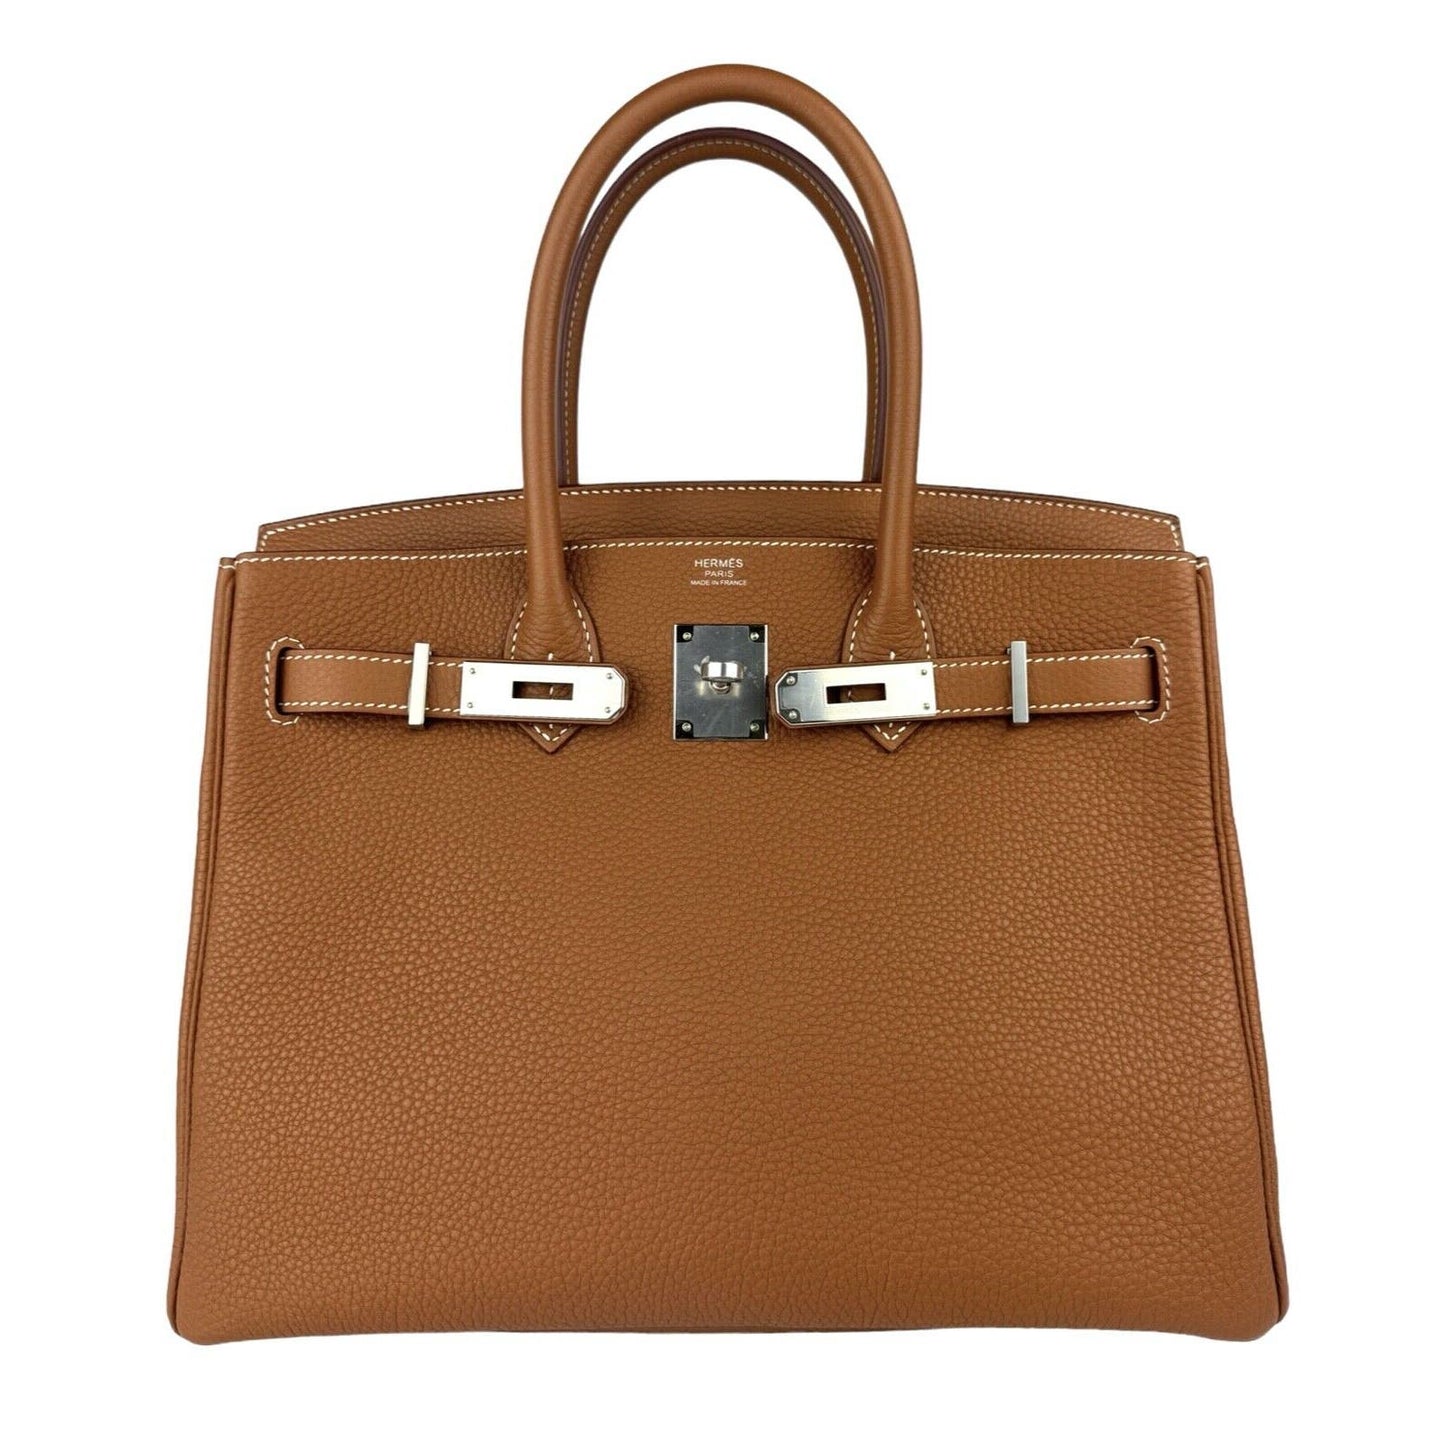 Hermes Birkin 30 Gold Tan Togo Leather Palladium Hardware Handbag